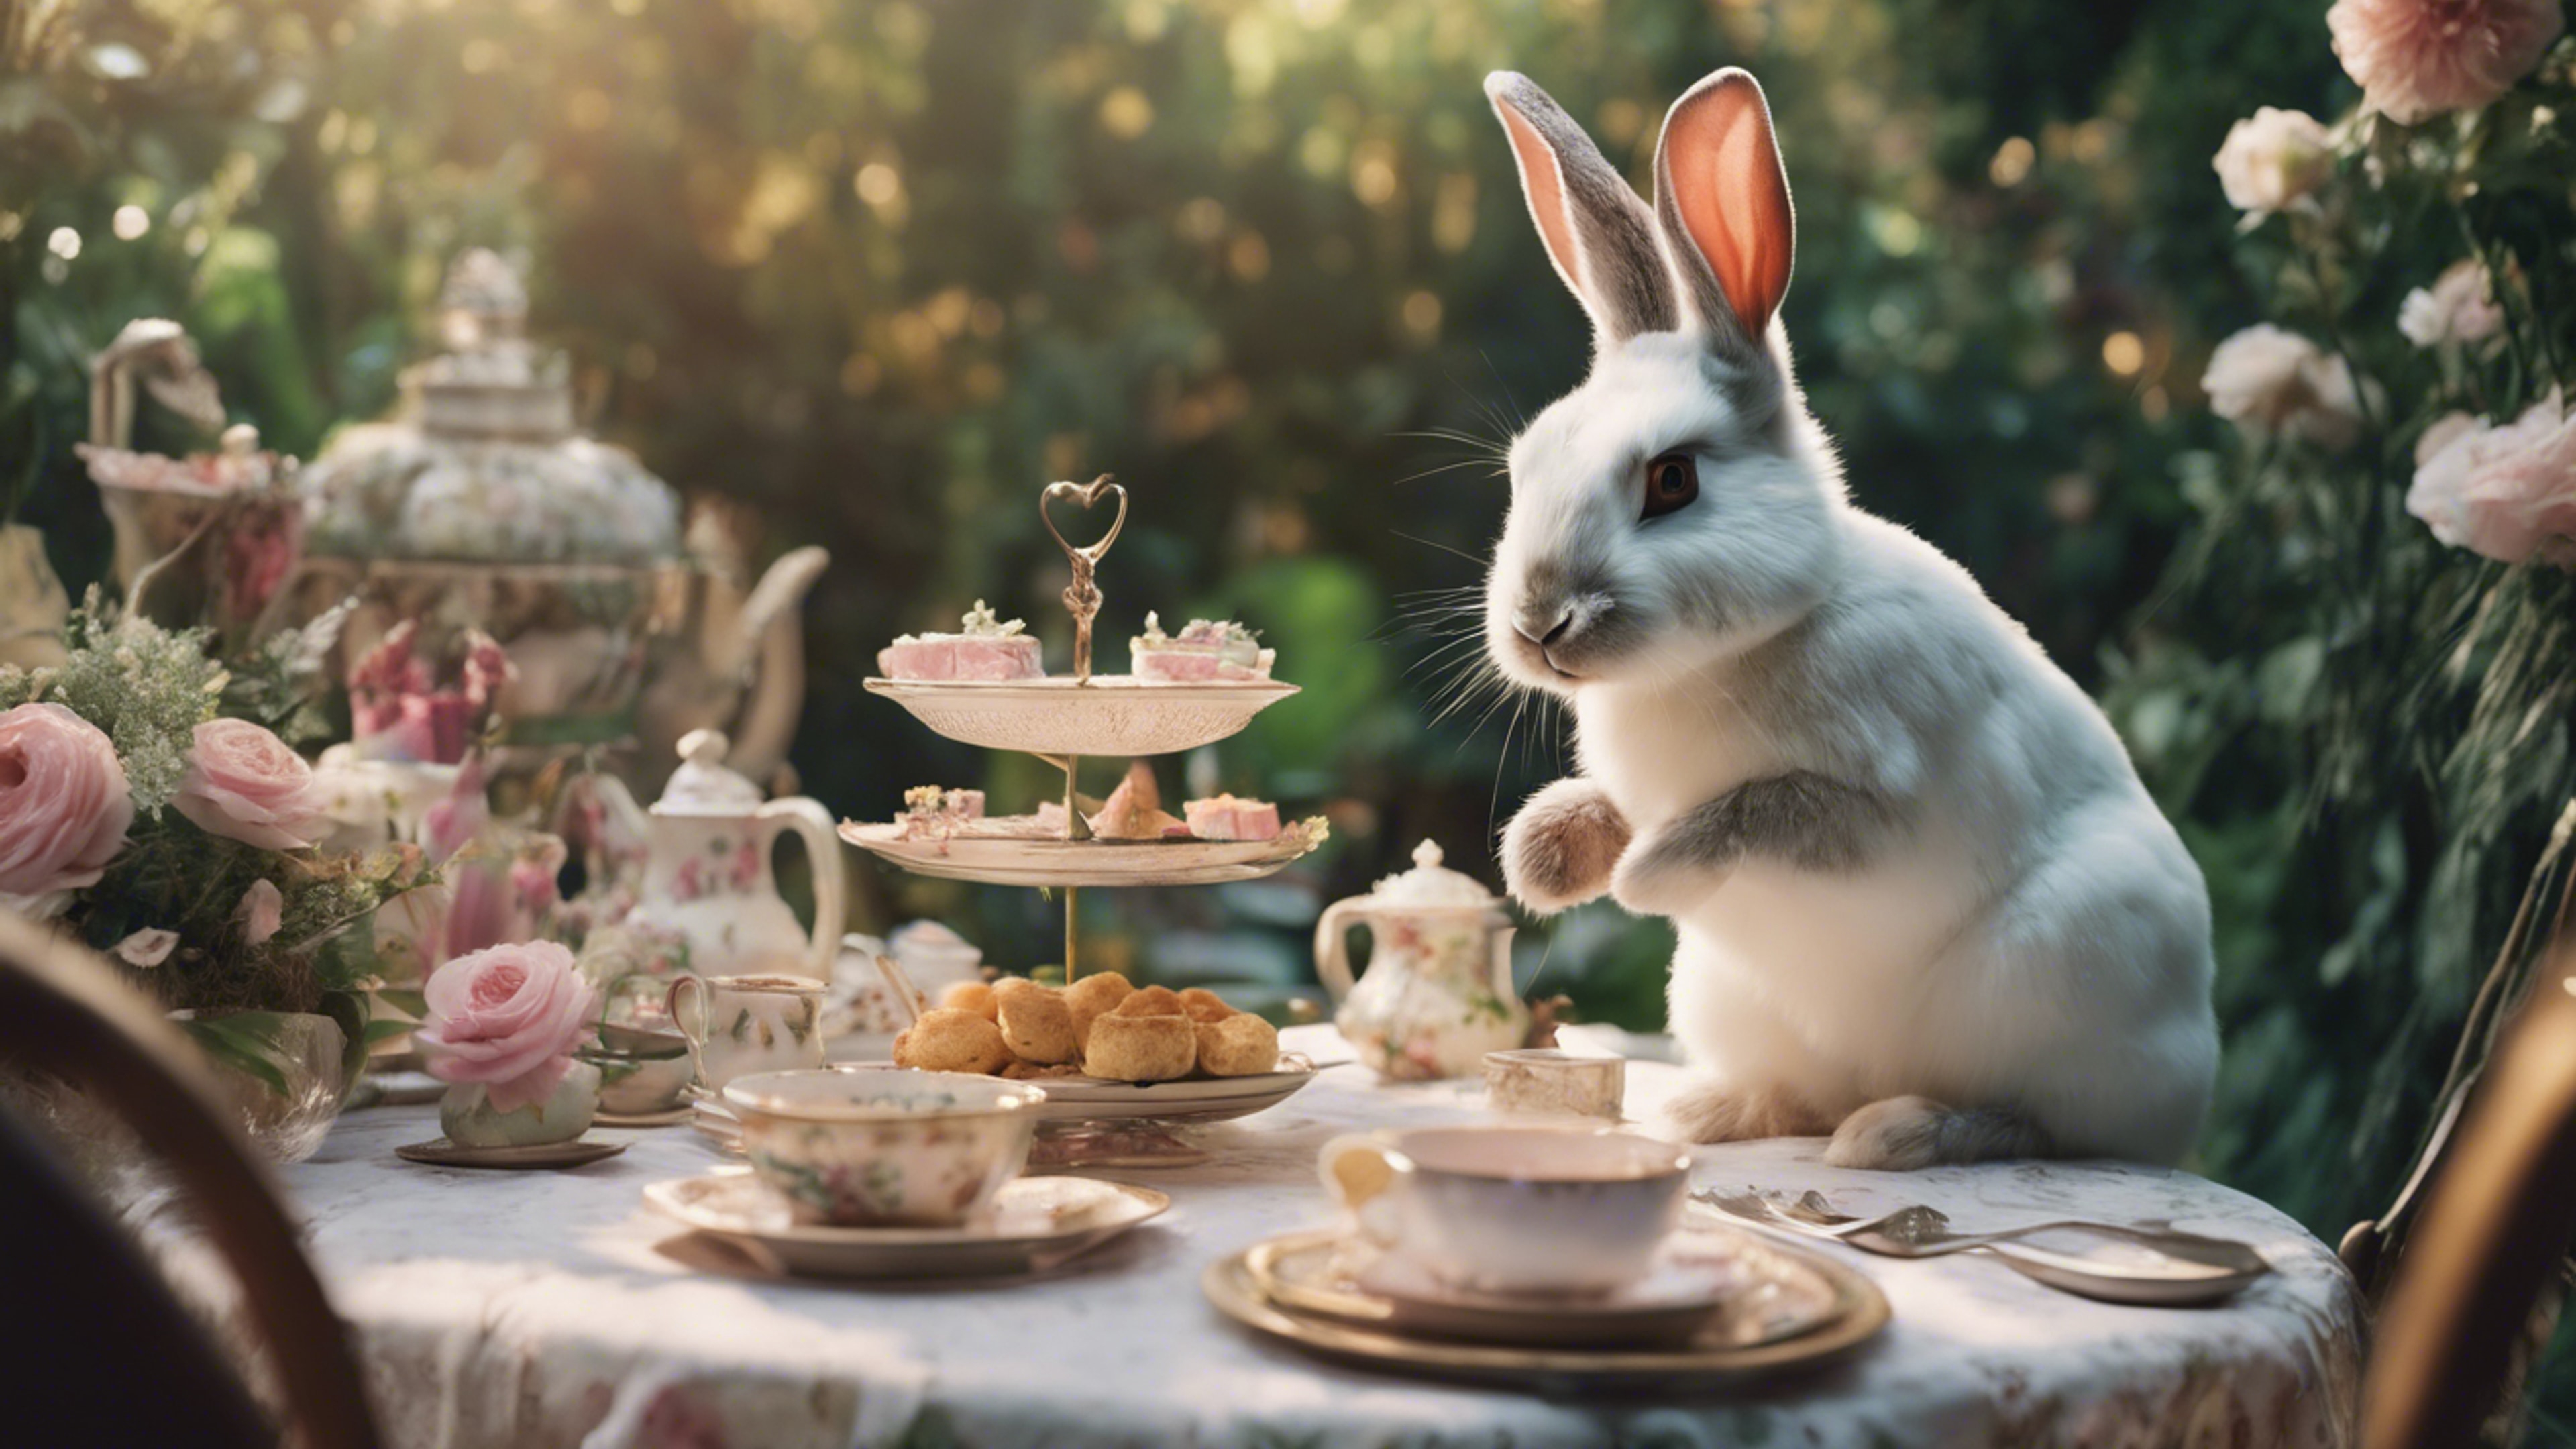 A rabbit hosting a lavish tea party in a whimsical garden.壁紙[eb13bb6ad2d74e32b417]